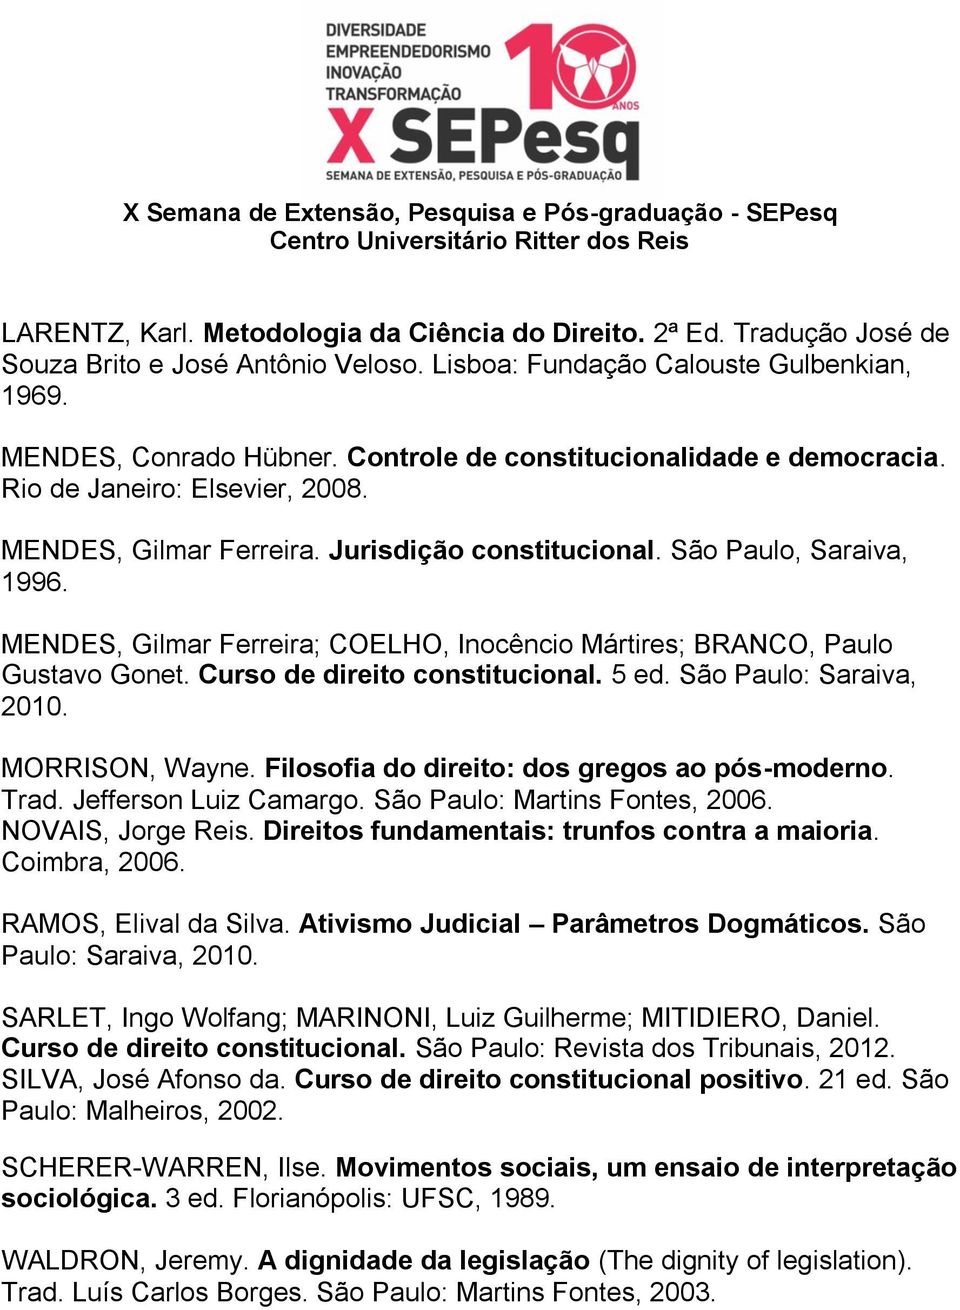 MENDES, Gilmar Ferreira; COELHO, Inocêncio Mártires; BRANCO, Paulo Gustavo Gonet. Curso de direito constitucional. 5 ed. São Paulo: Saraiva, 2010. MORRISON, Wayne.